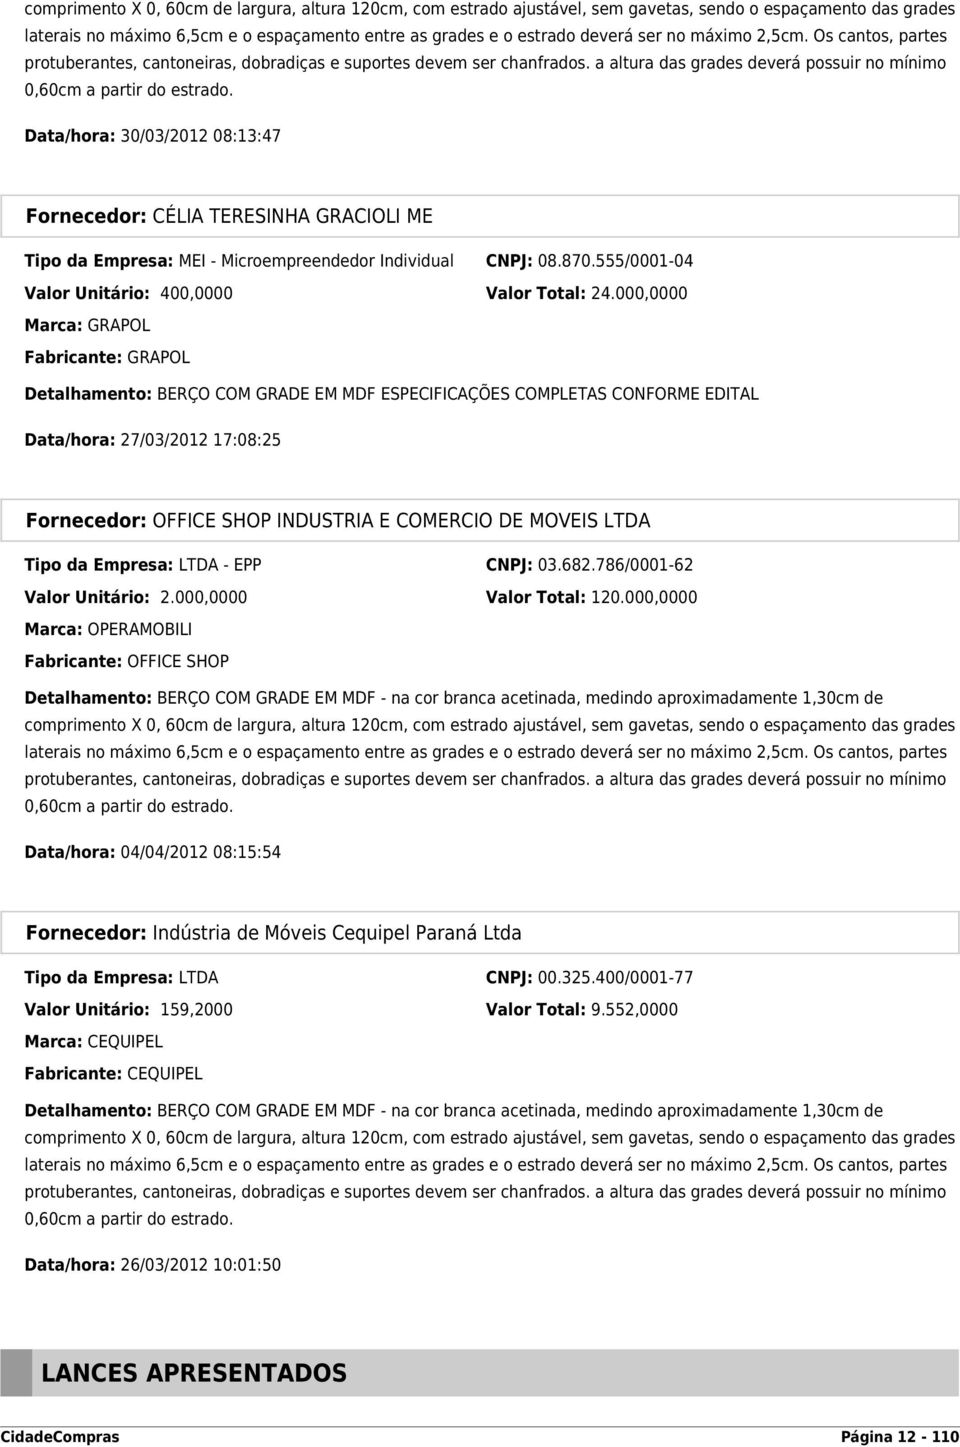 Data/hora: 30/03/2012 08:13:47 Tipo da Empresa: MEI - Microempreendedor Individual CNPJ: 08.870.555/0001-04 Valor Unitário: 400,0000 Valor Total: 24.